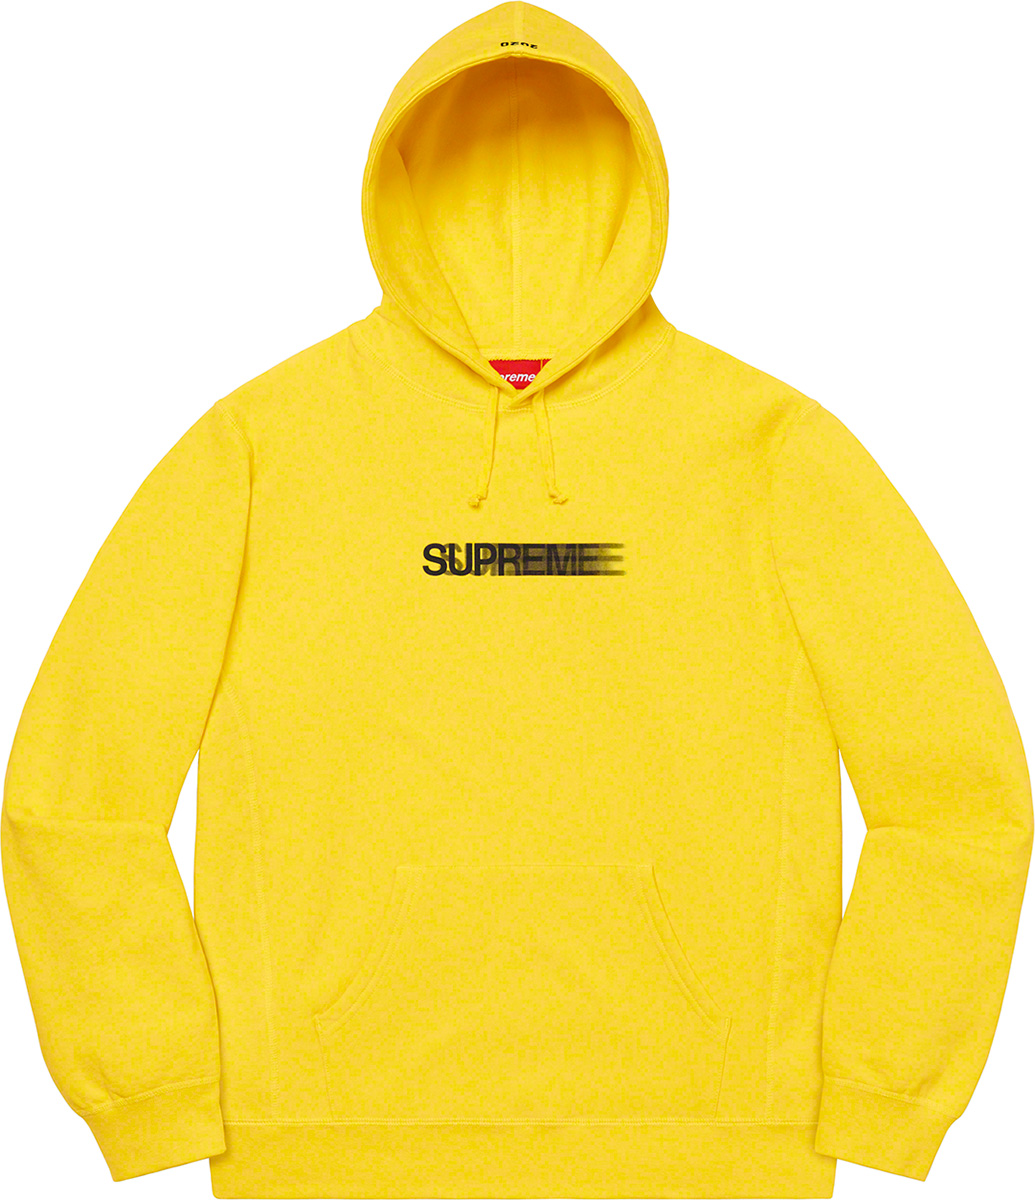 Supreme S/S20 SS20 2020 Motion Logo hoodie sweatshirt